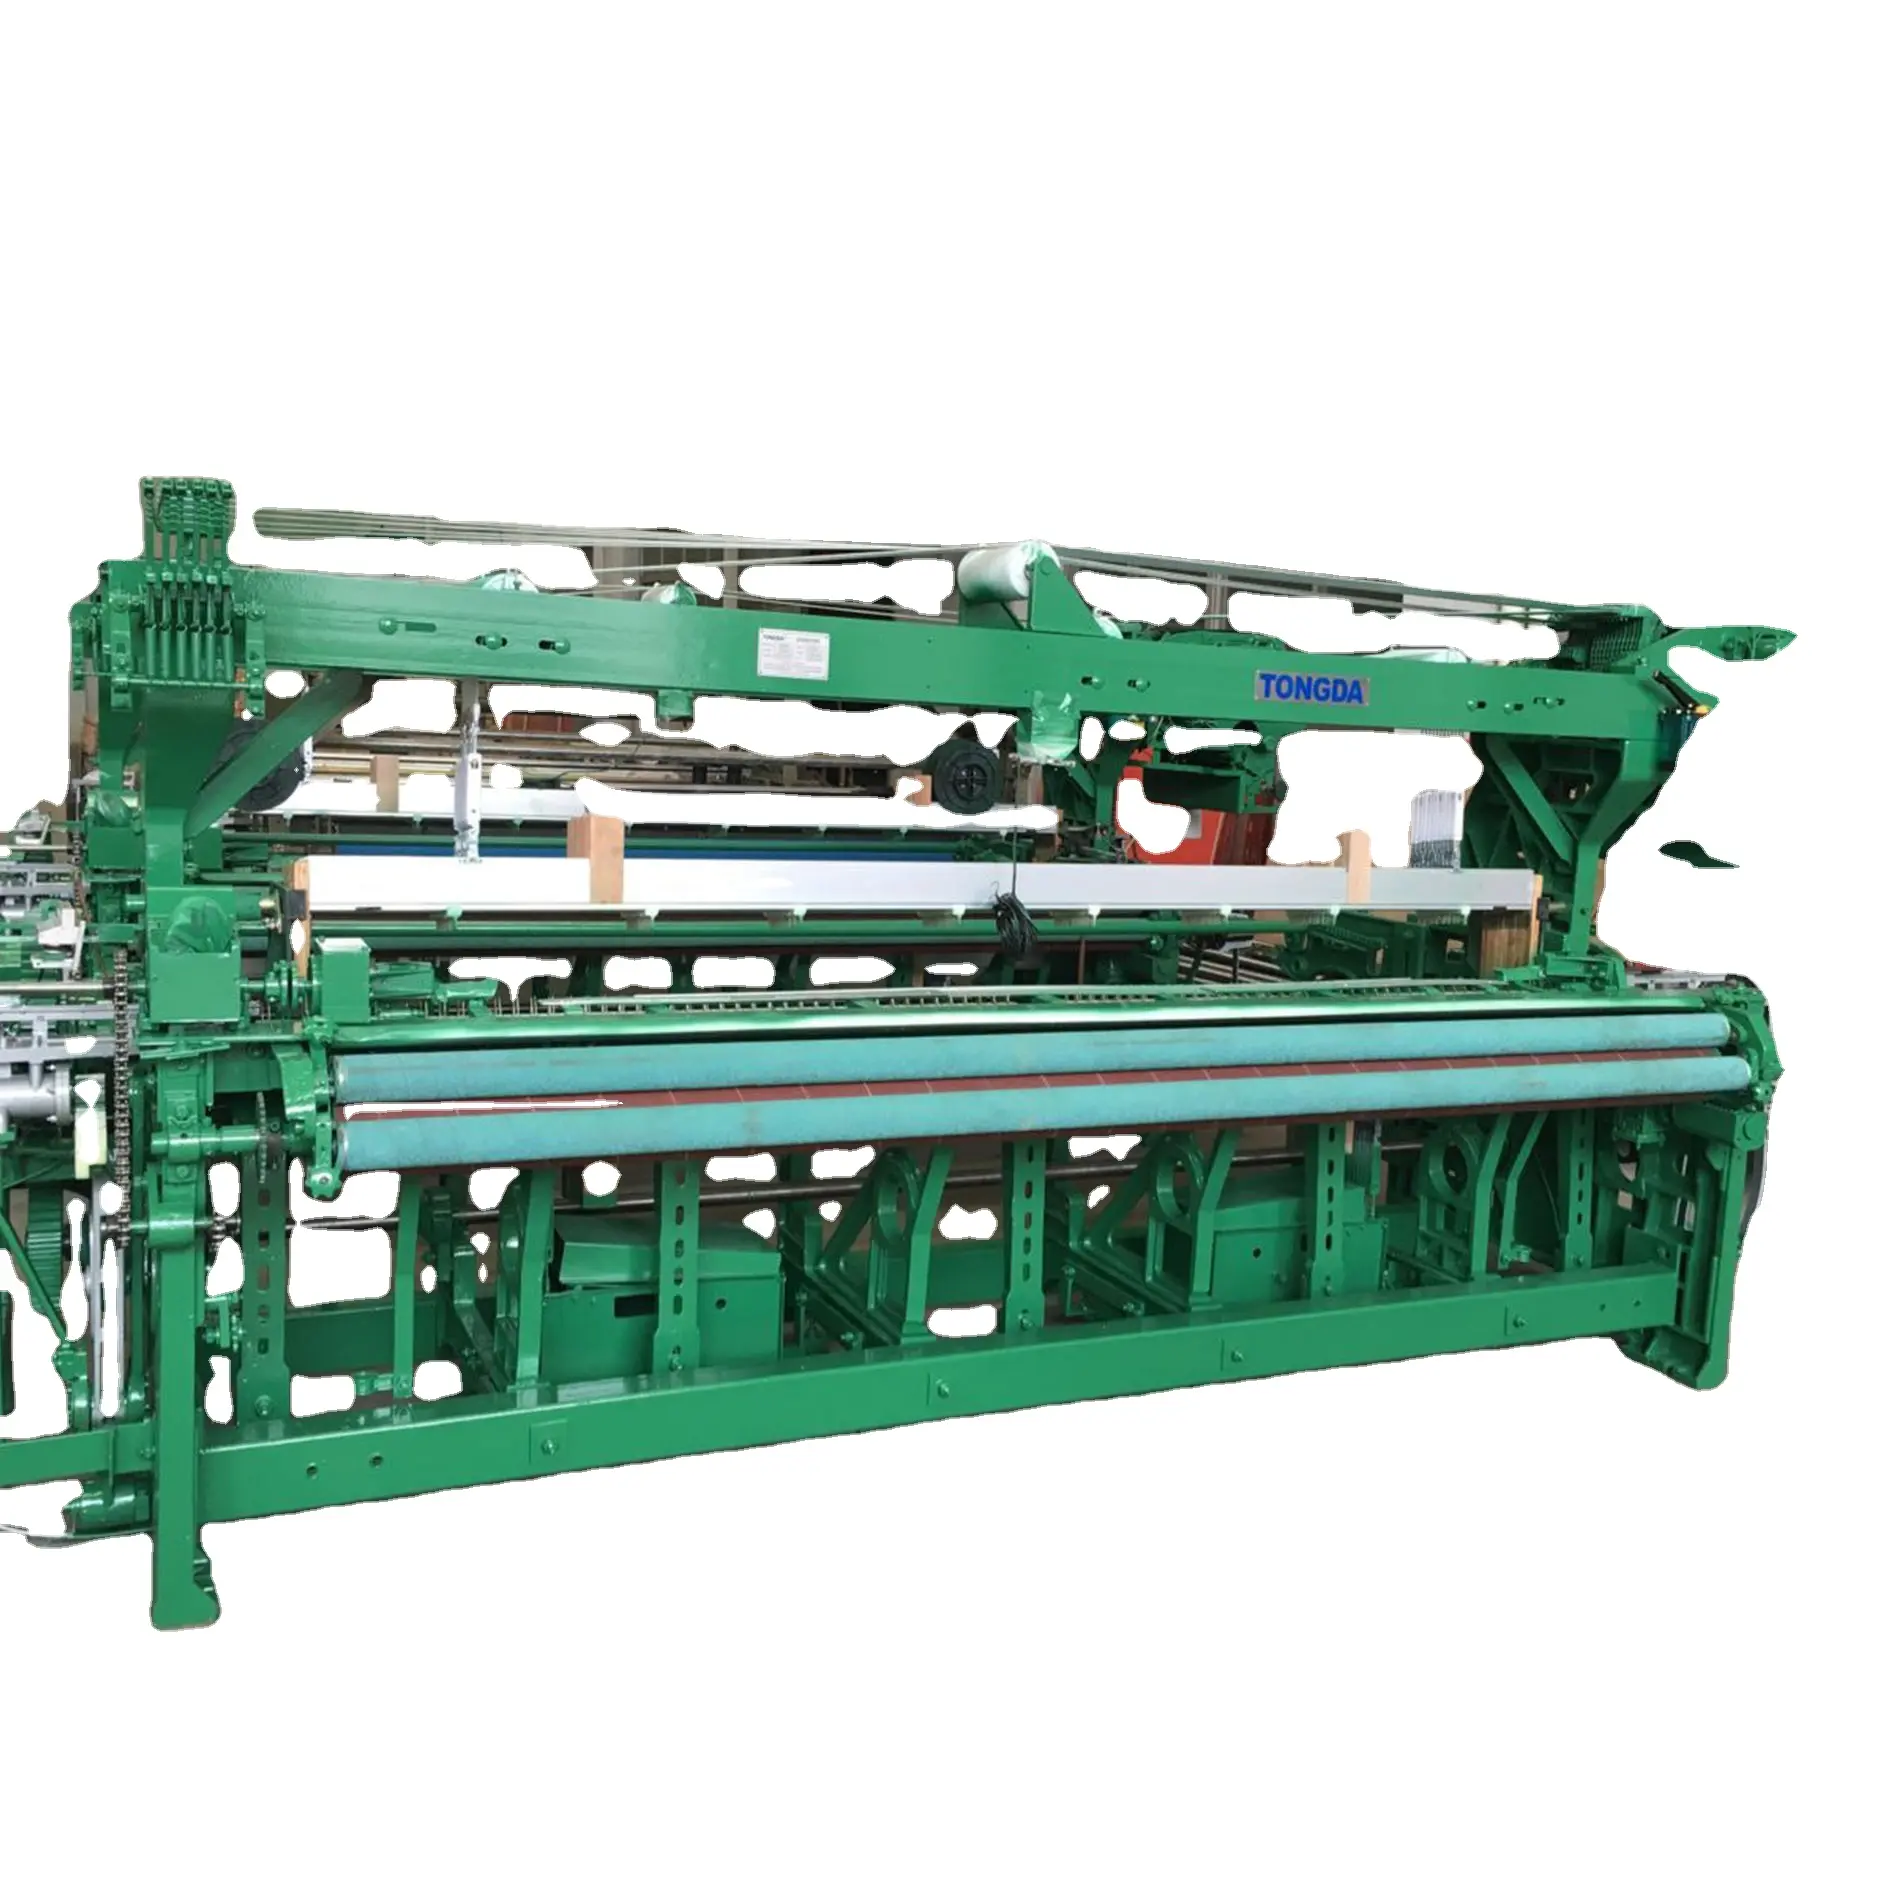 TONGDA TD789 shuttle loom Jute weaving  Machine Rapier Loom